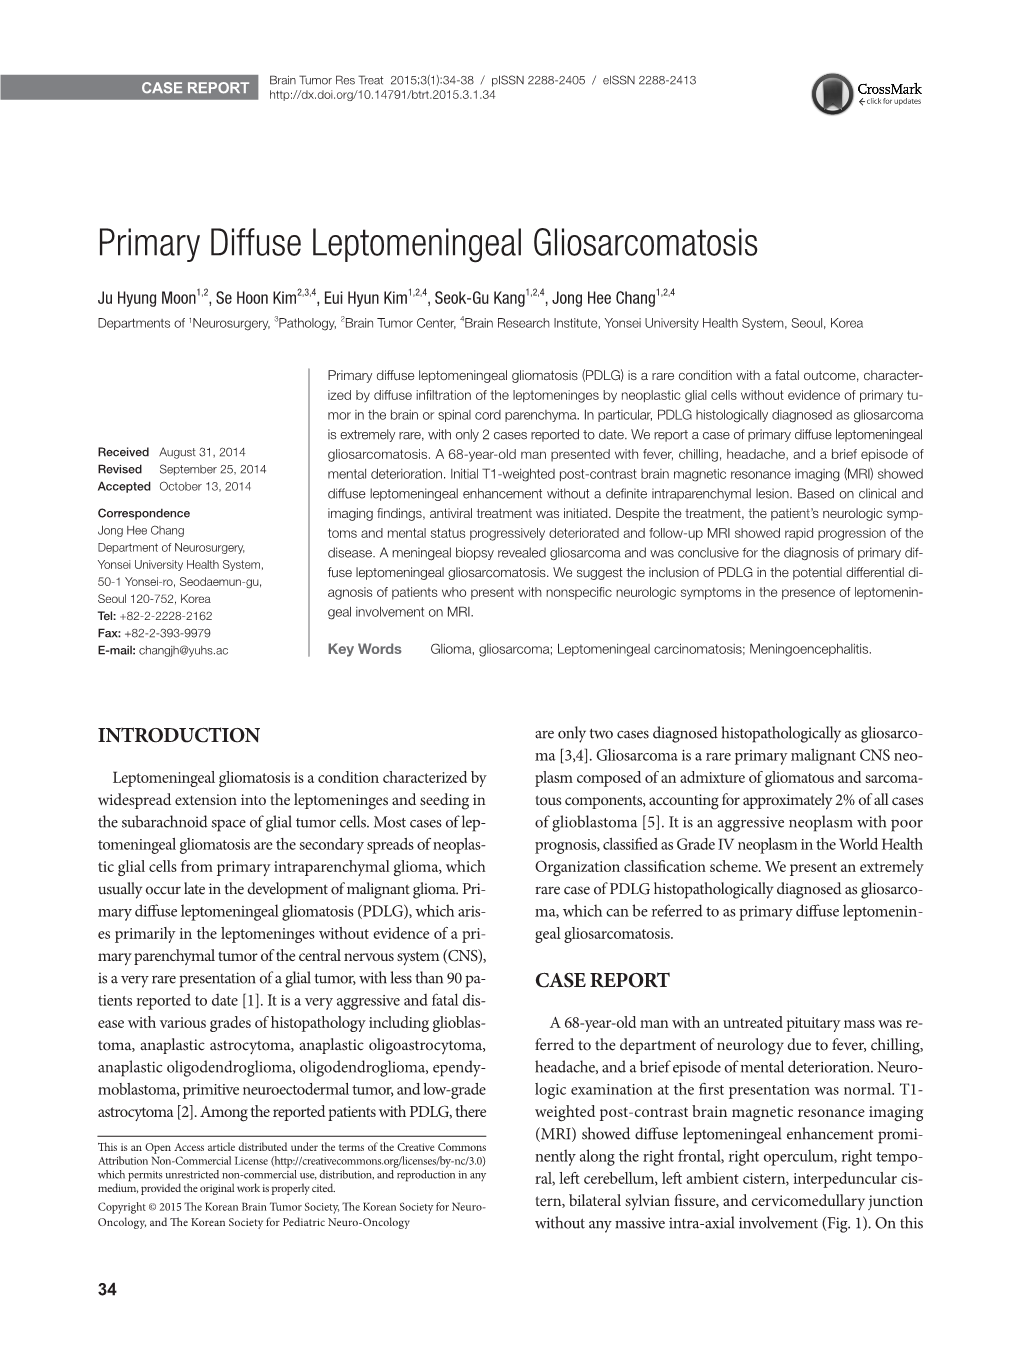 Primary Diffuse Leptomeningeal Gliosarcomatosis